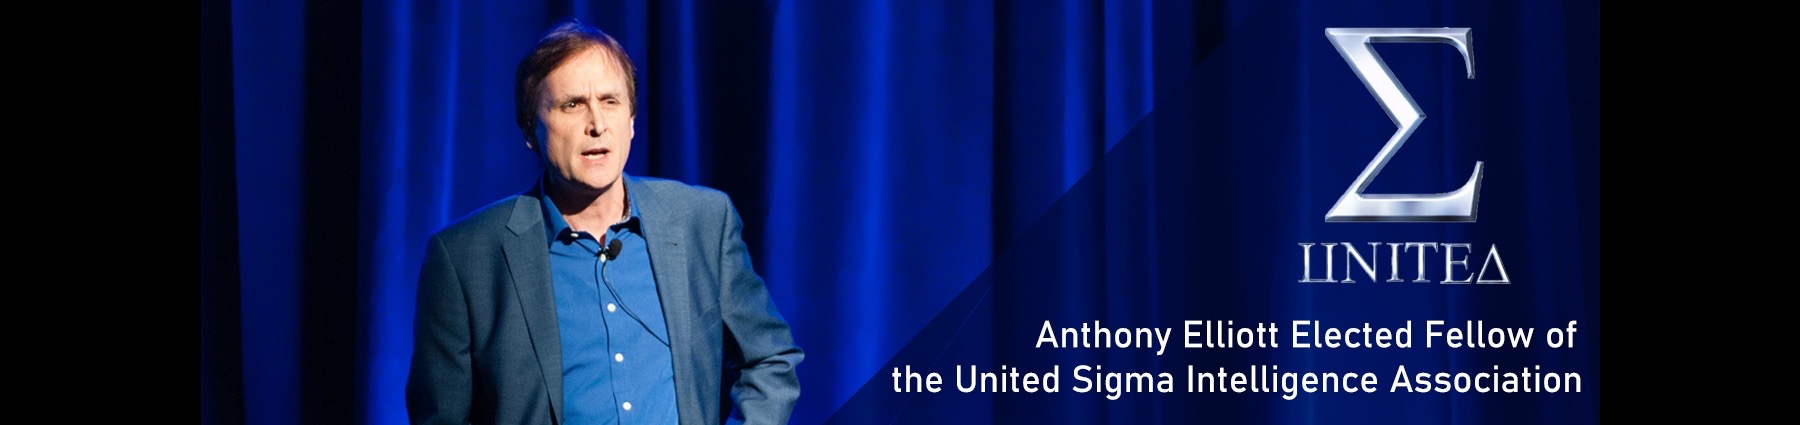 Anthony Elliott elected Fellow of the United Sigma Intelligence Association